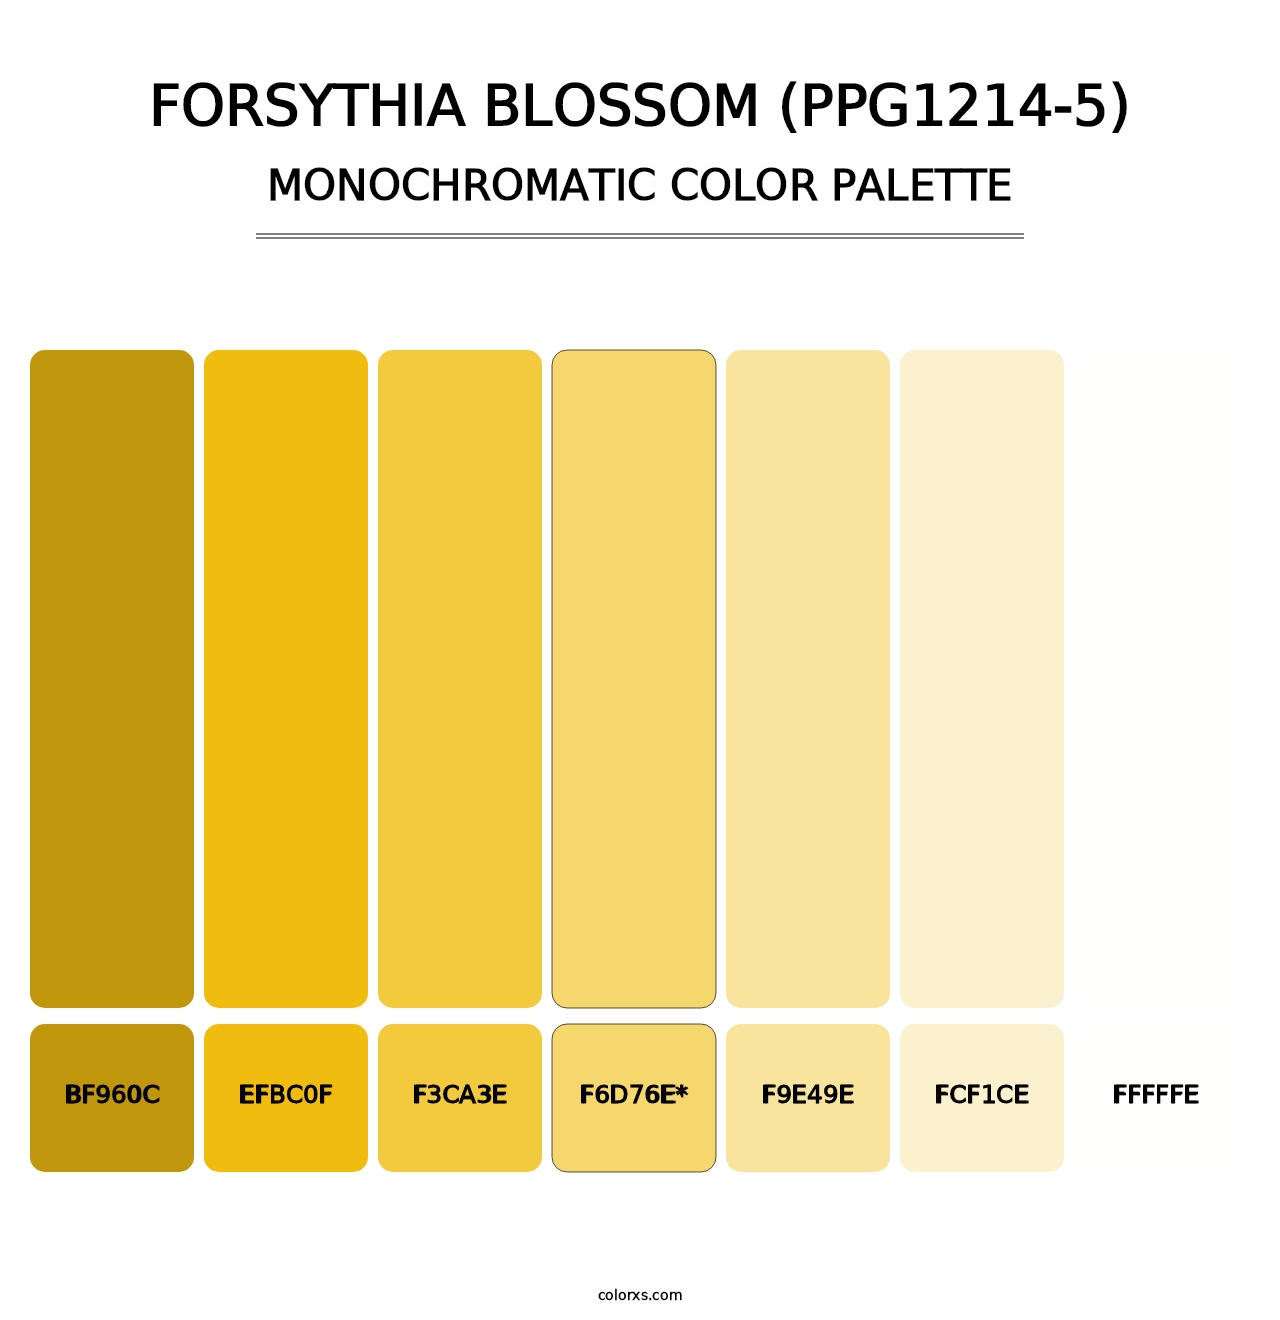 Forsythia Blossom (PPG1214-5) - Monochromatic Color Palette